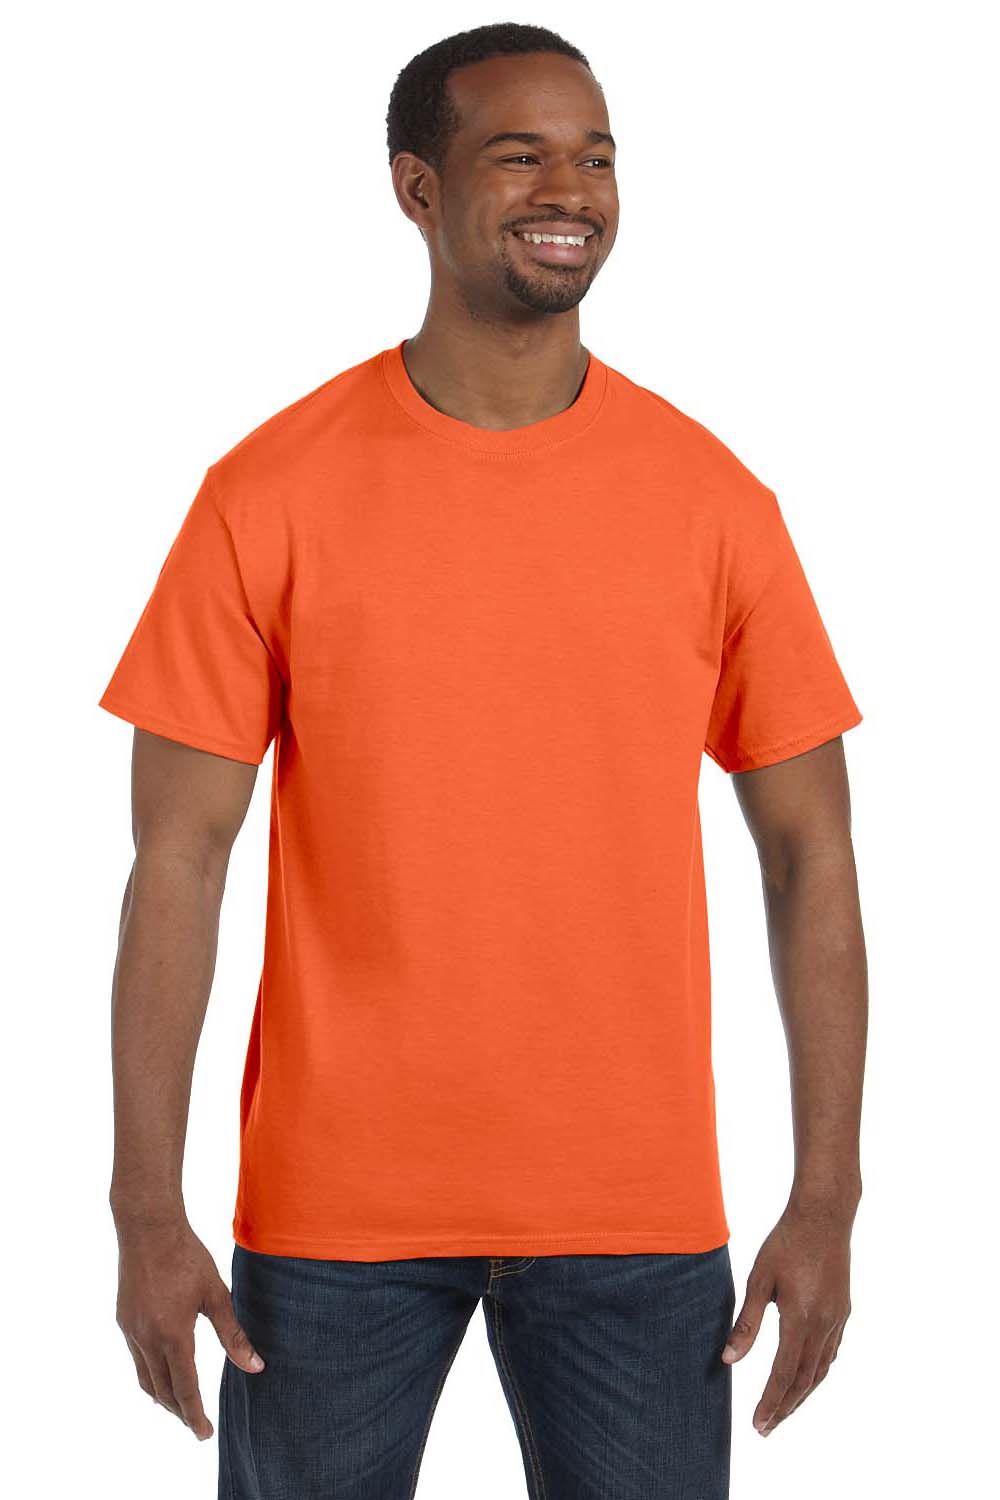 Hanes 5250T Mens ComfortSoft Short Sleeve Crewneck T-Shirt Athletic Orange Front